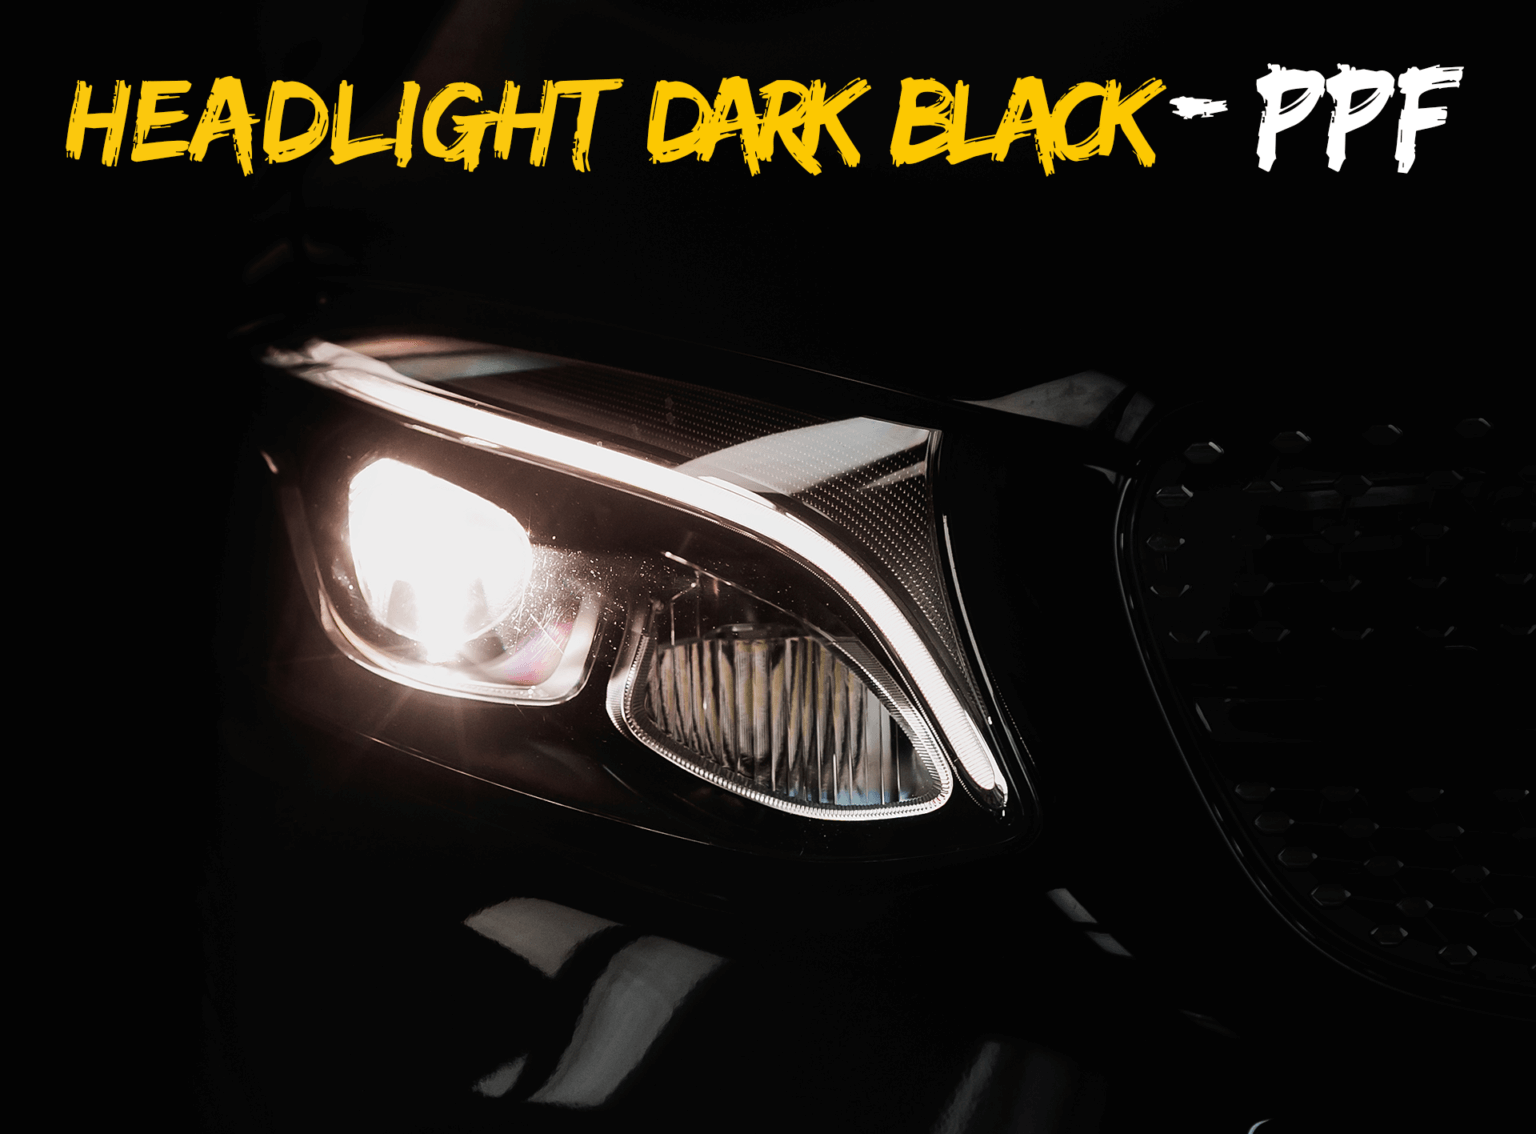 headlight_dark_black_ppf-2-1536x1134